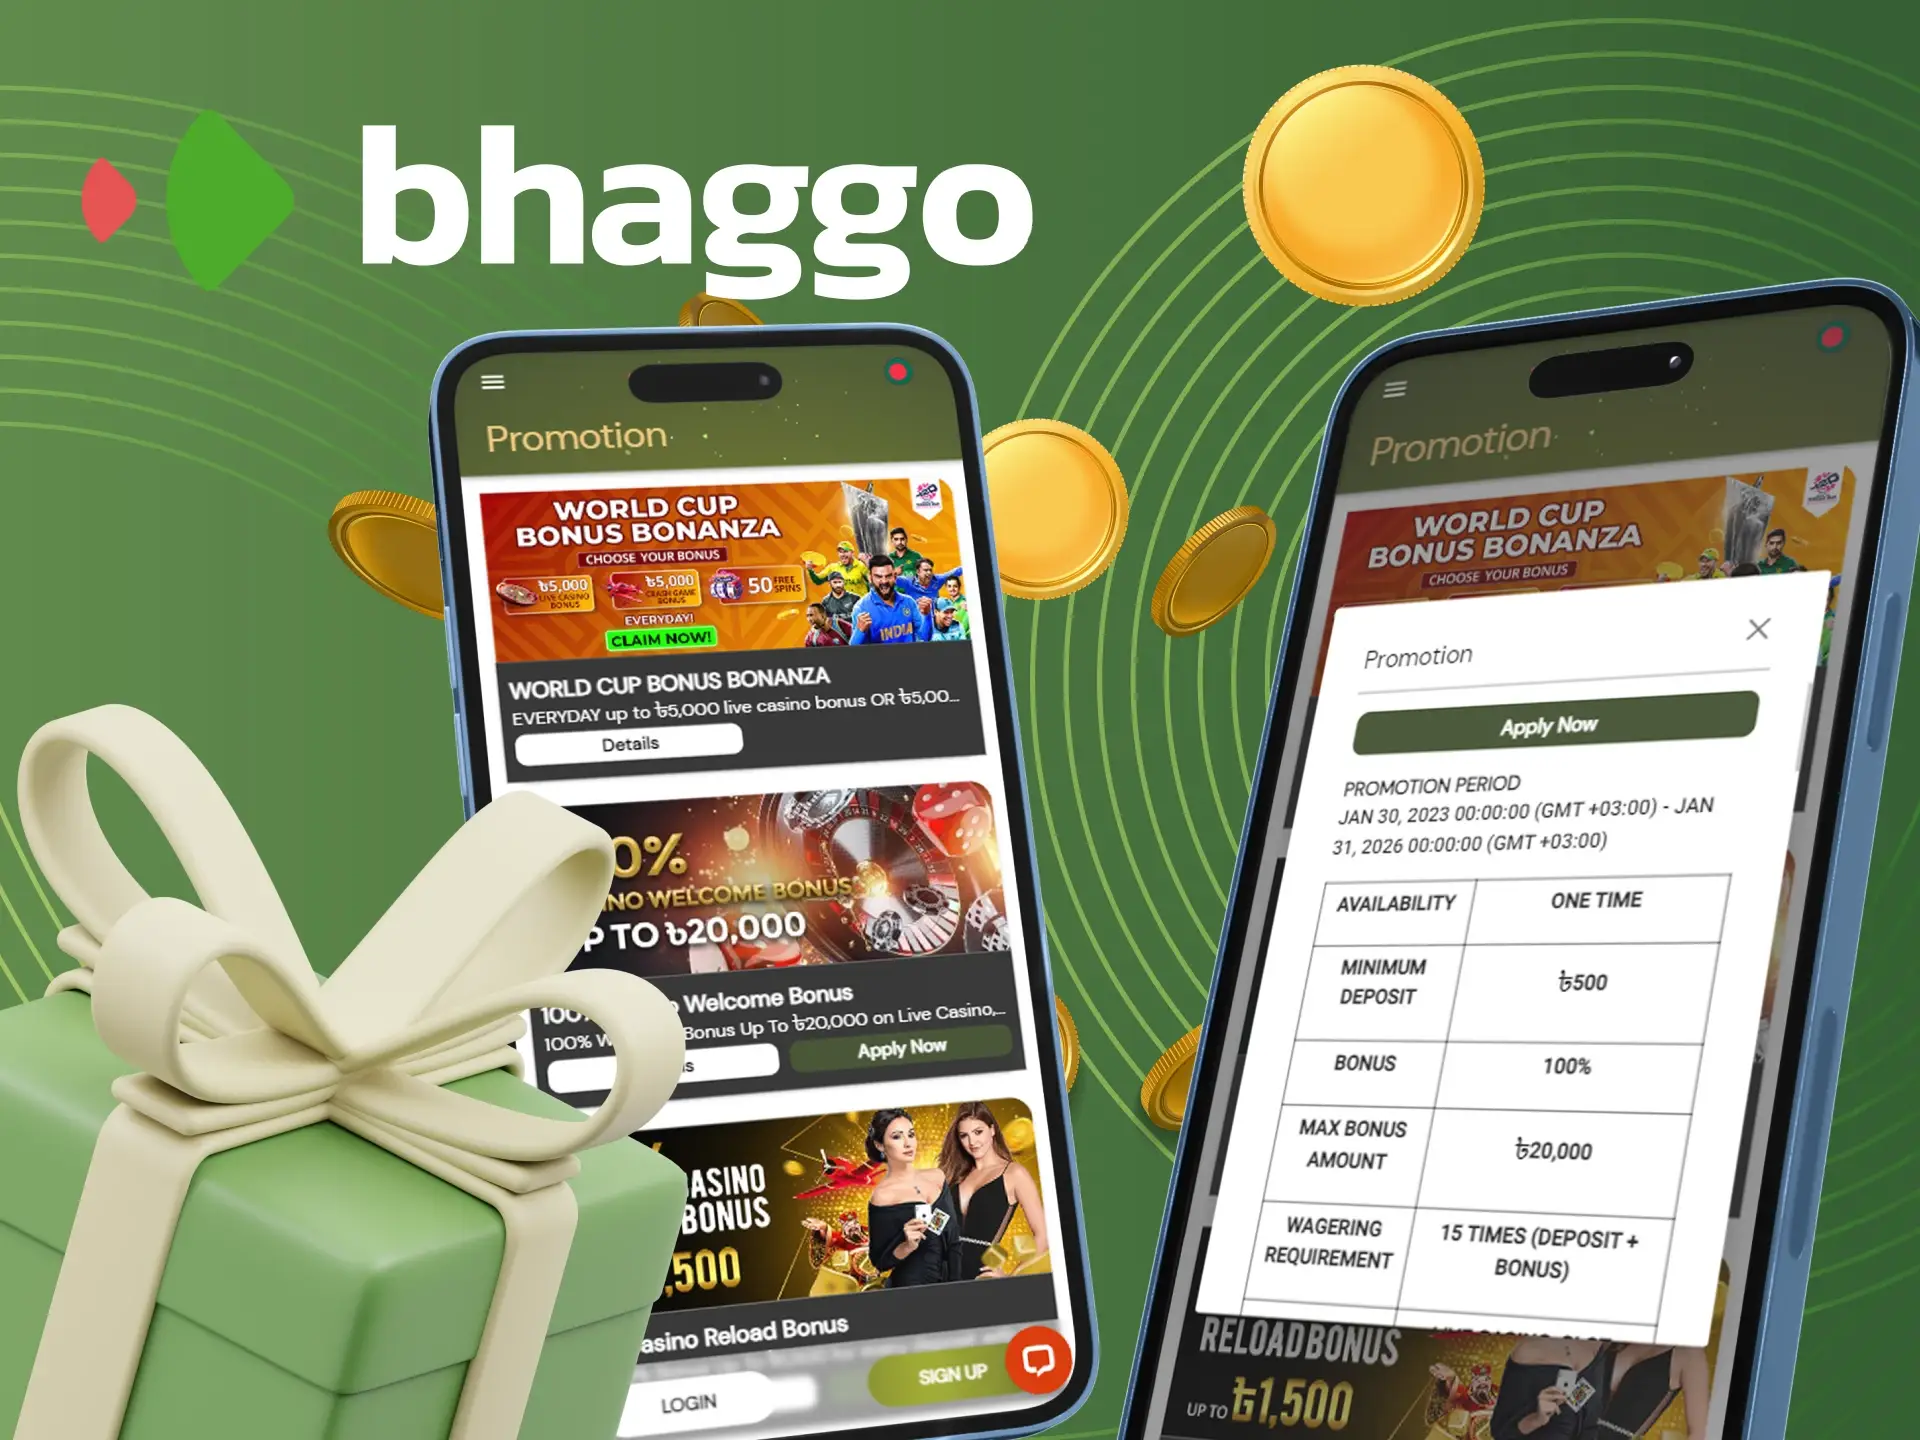 What bonuses can I get at Bhaggo online casino.